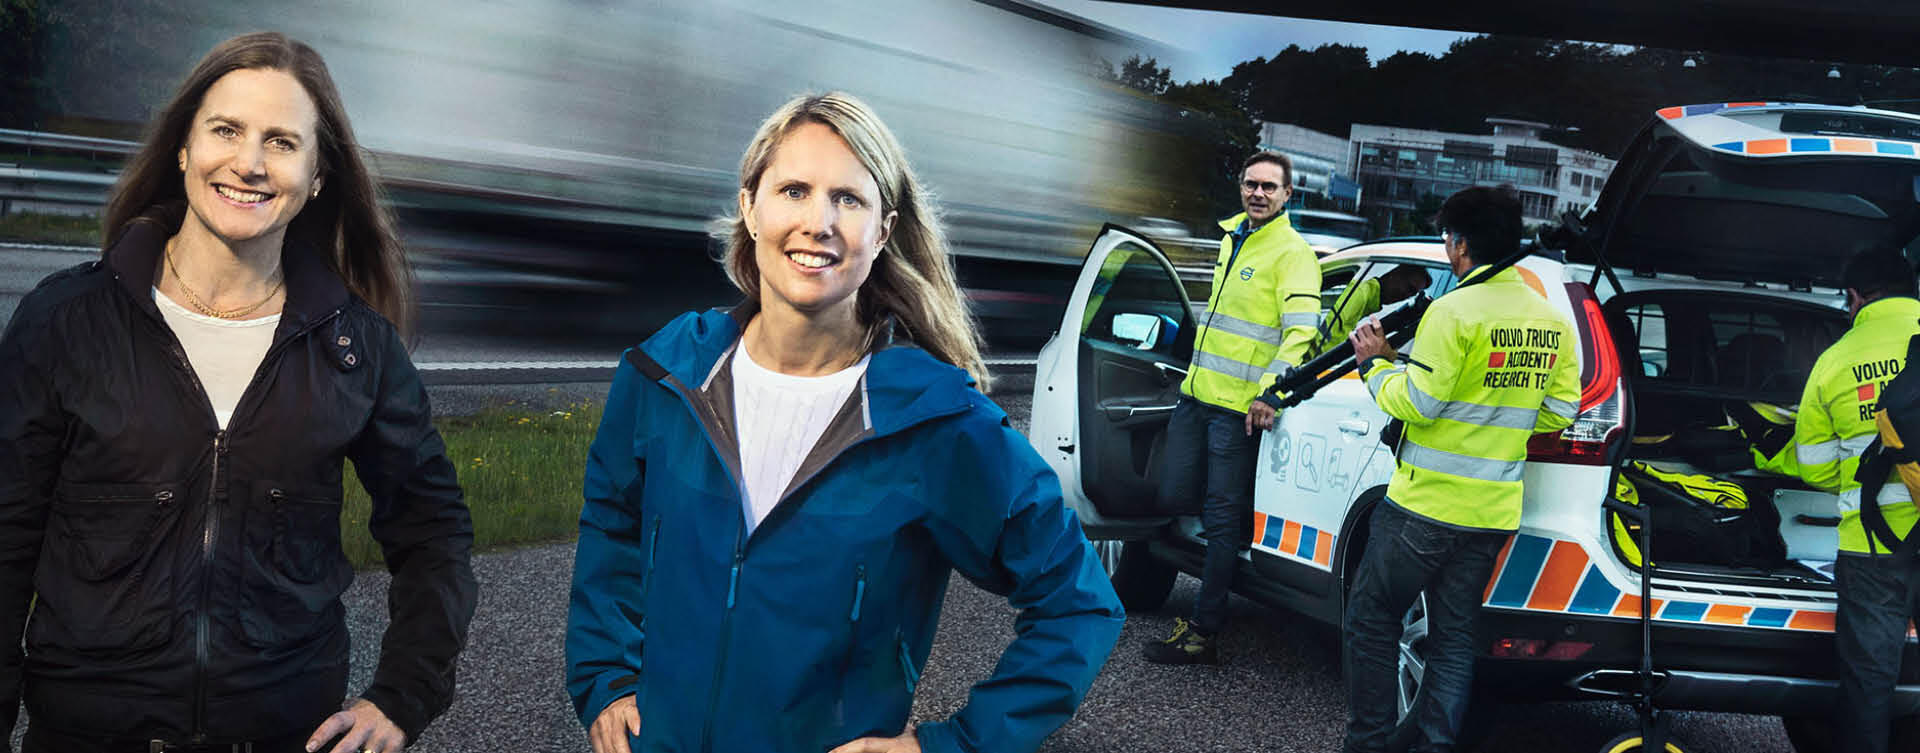 Accident Research Team maakt Volvo-trucks veiliger